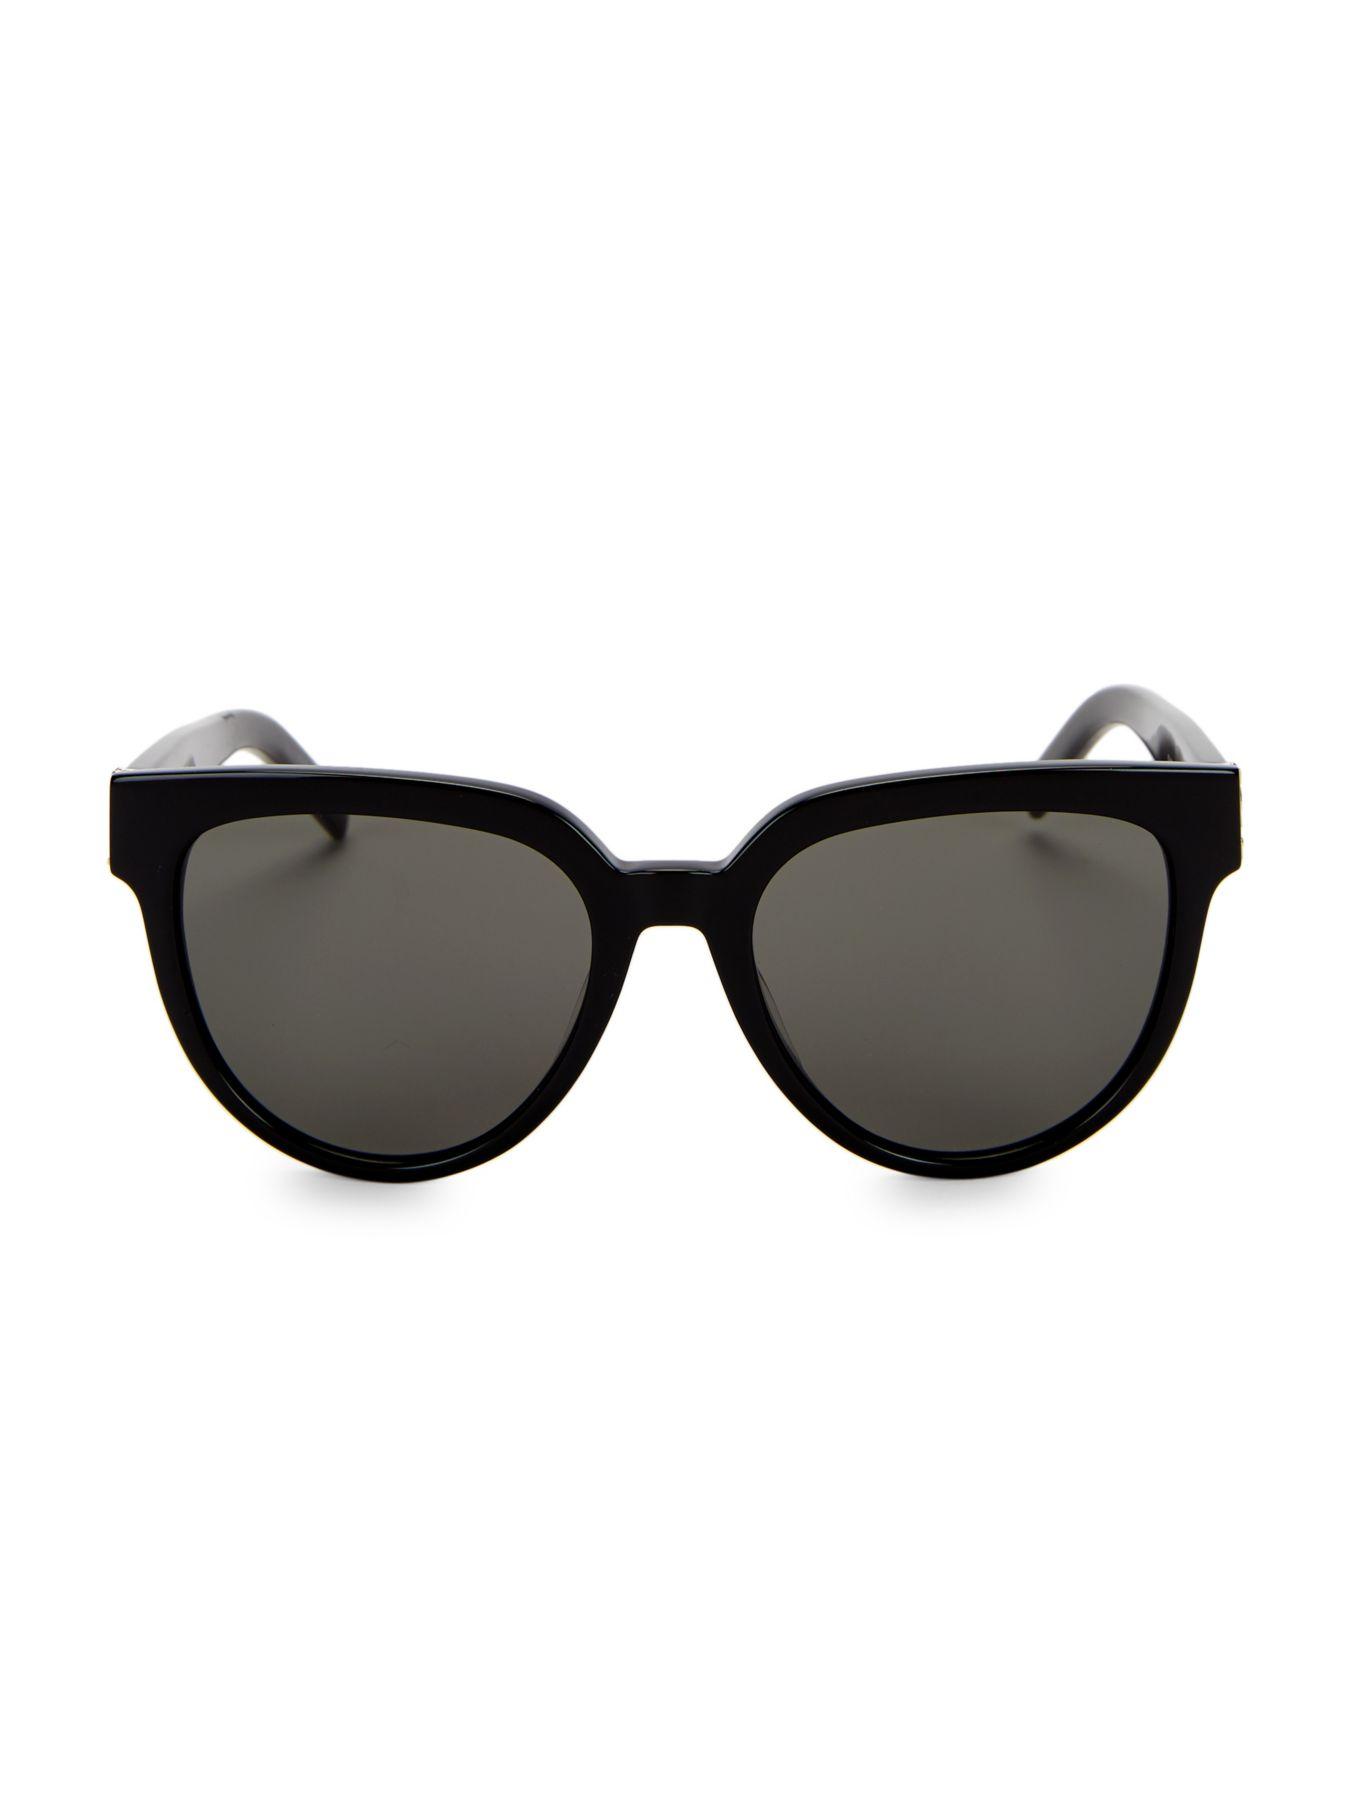 Saint Laurent M28 54mm Cat Eye Sunglasses in Black - Lyst